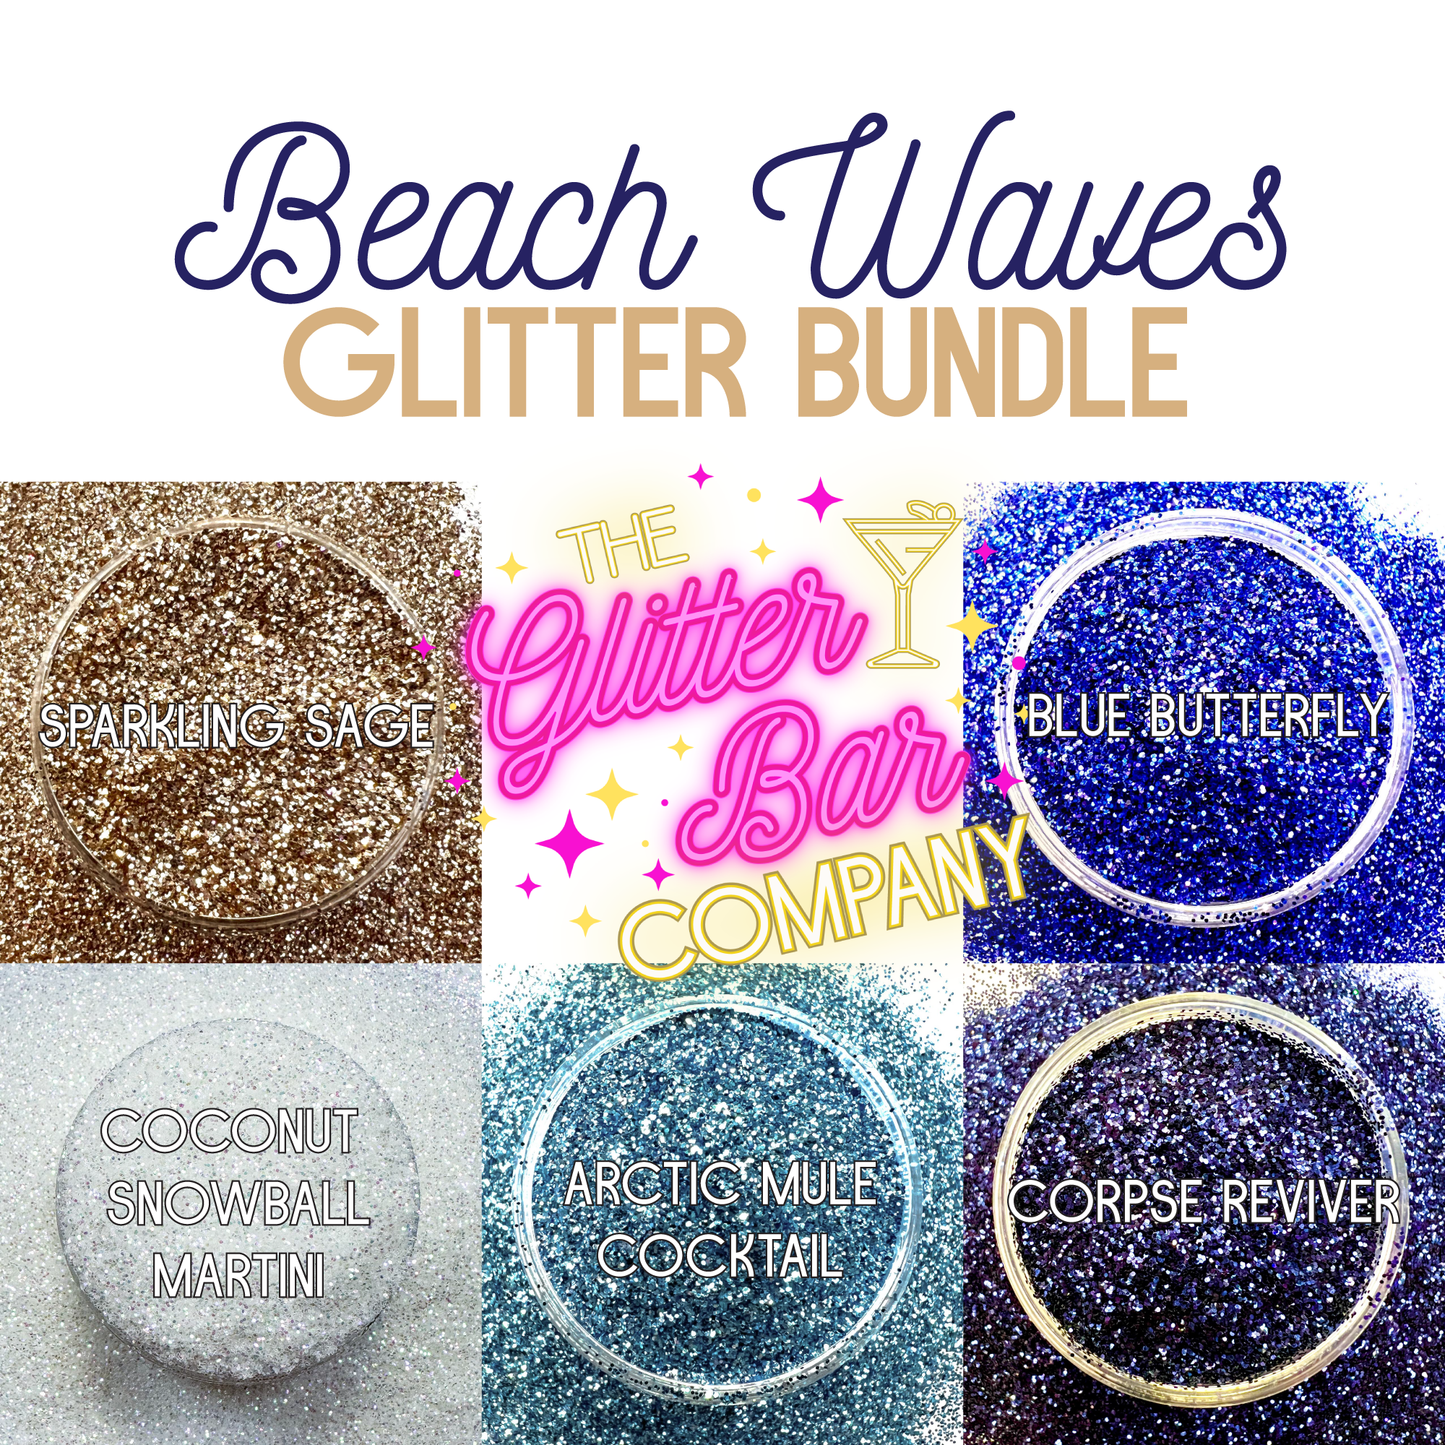 Beach Waves Glitter Bundle